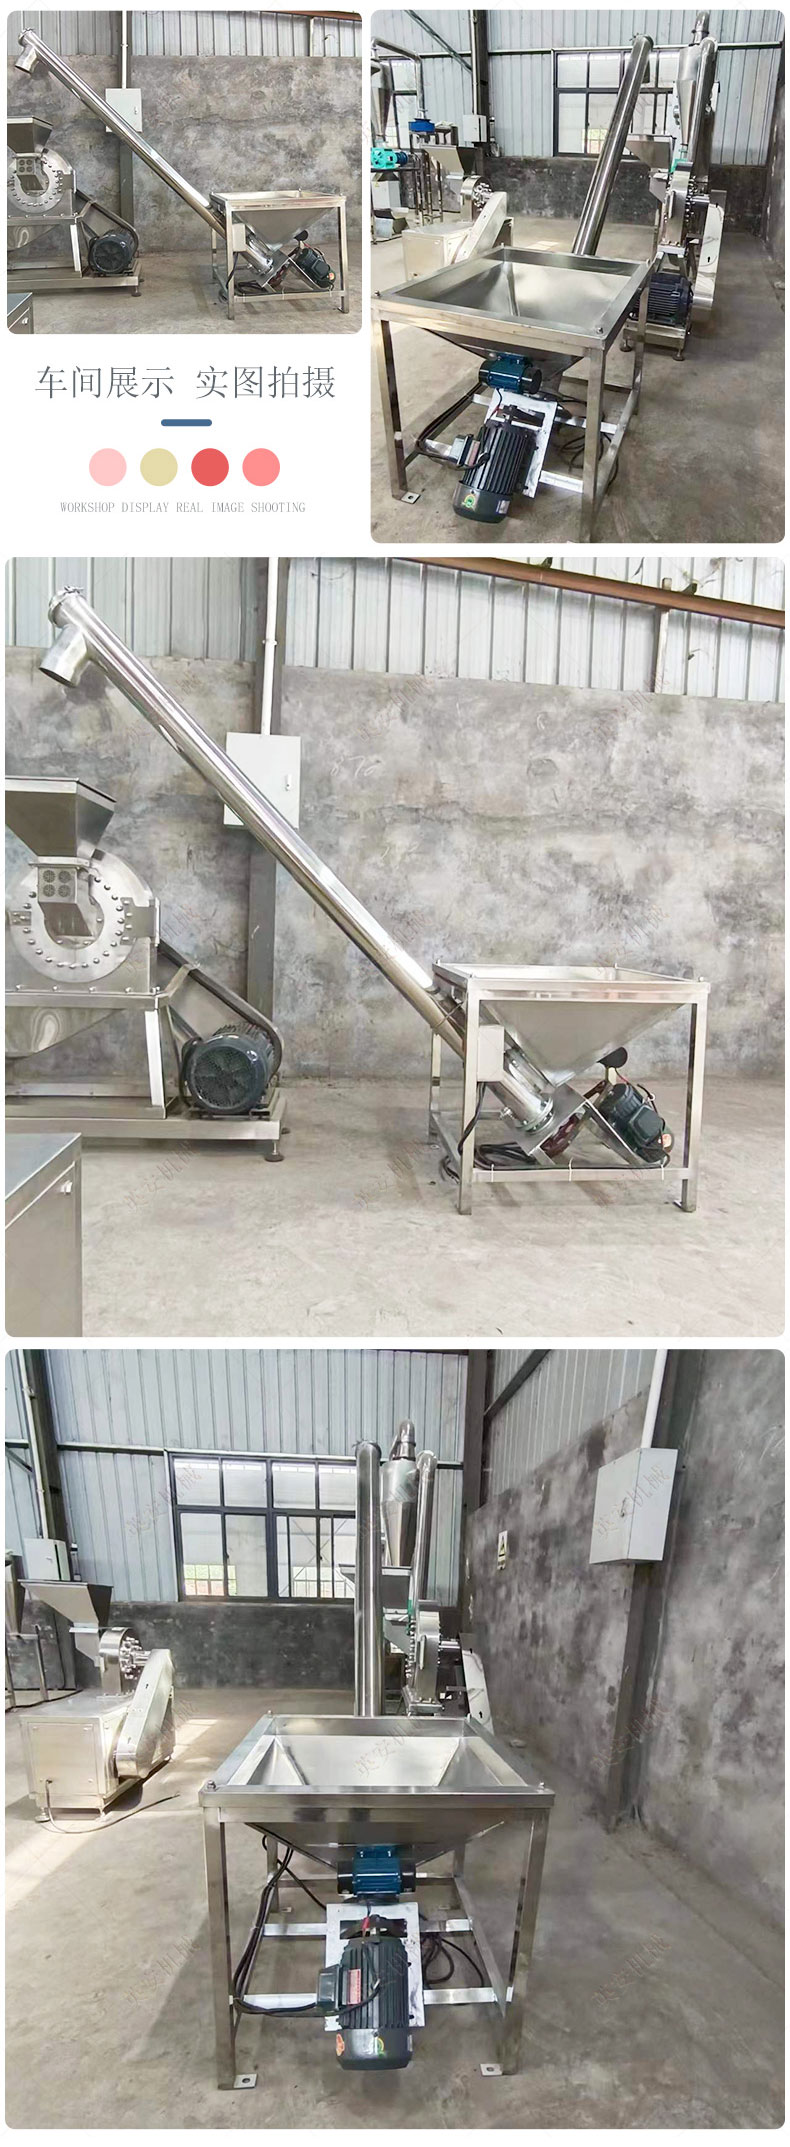 Twisted Dragon Spiral Feeding Machine Stainless Steel Flour Wheat Elevator Movable Screw Conveyor